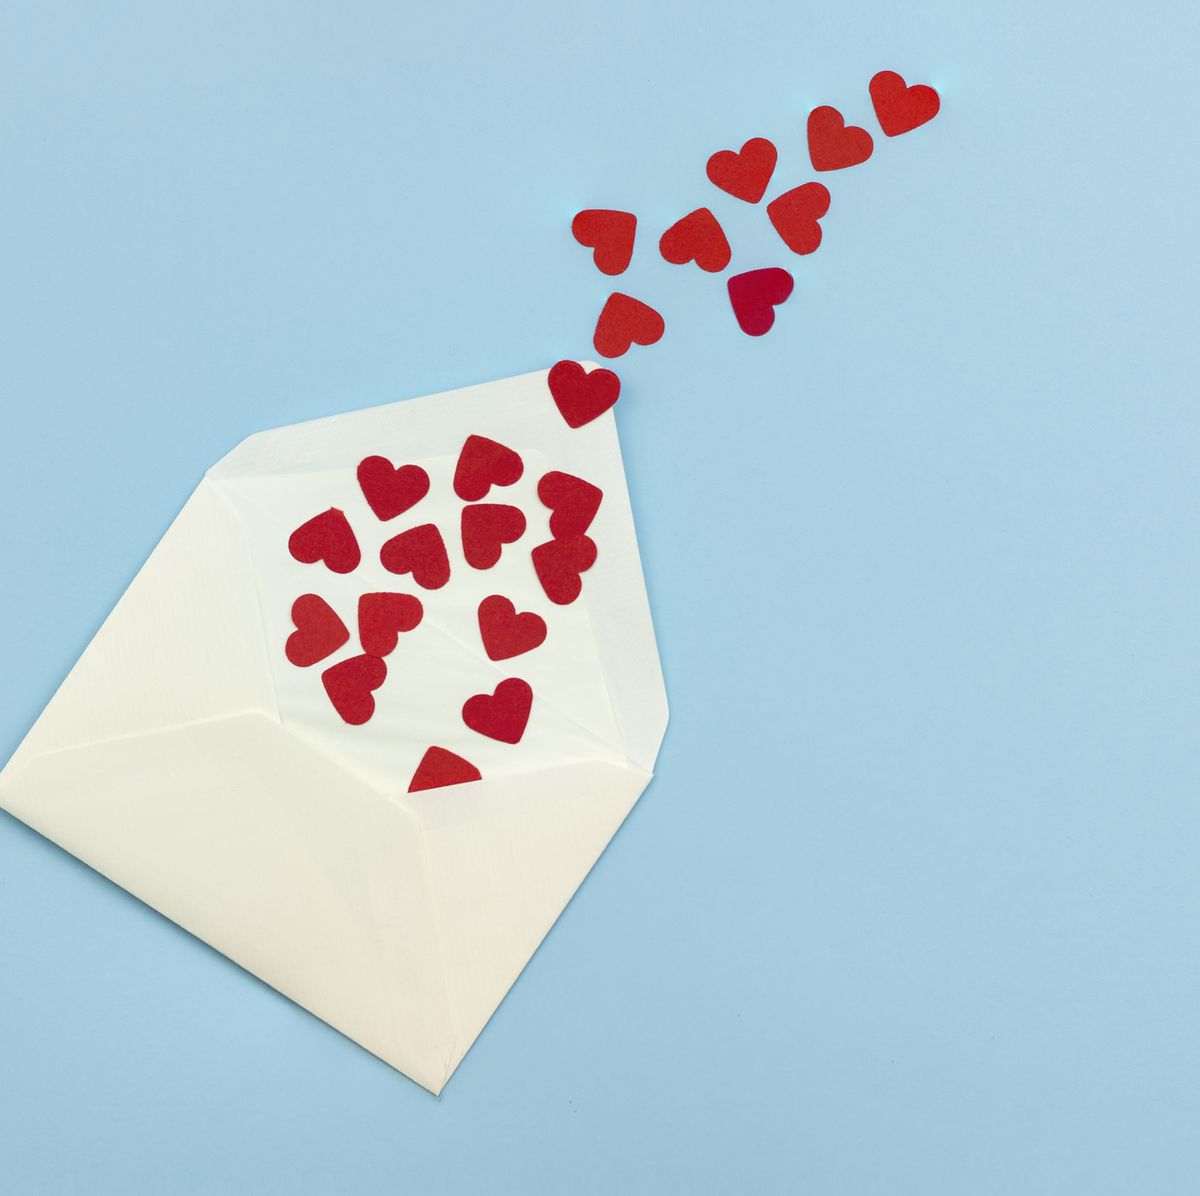 Valentine's Day Card, Cute Valentine's Day Card, Happy Valentines Day,  Valentine's Day Card for Him/Her/Boyfriend/Girlfriend/Husband/Wife